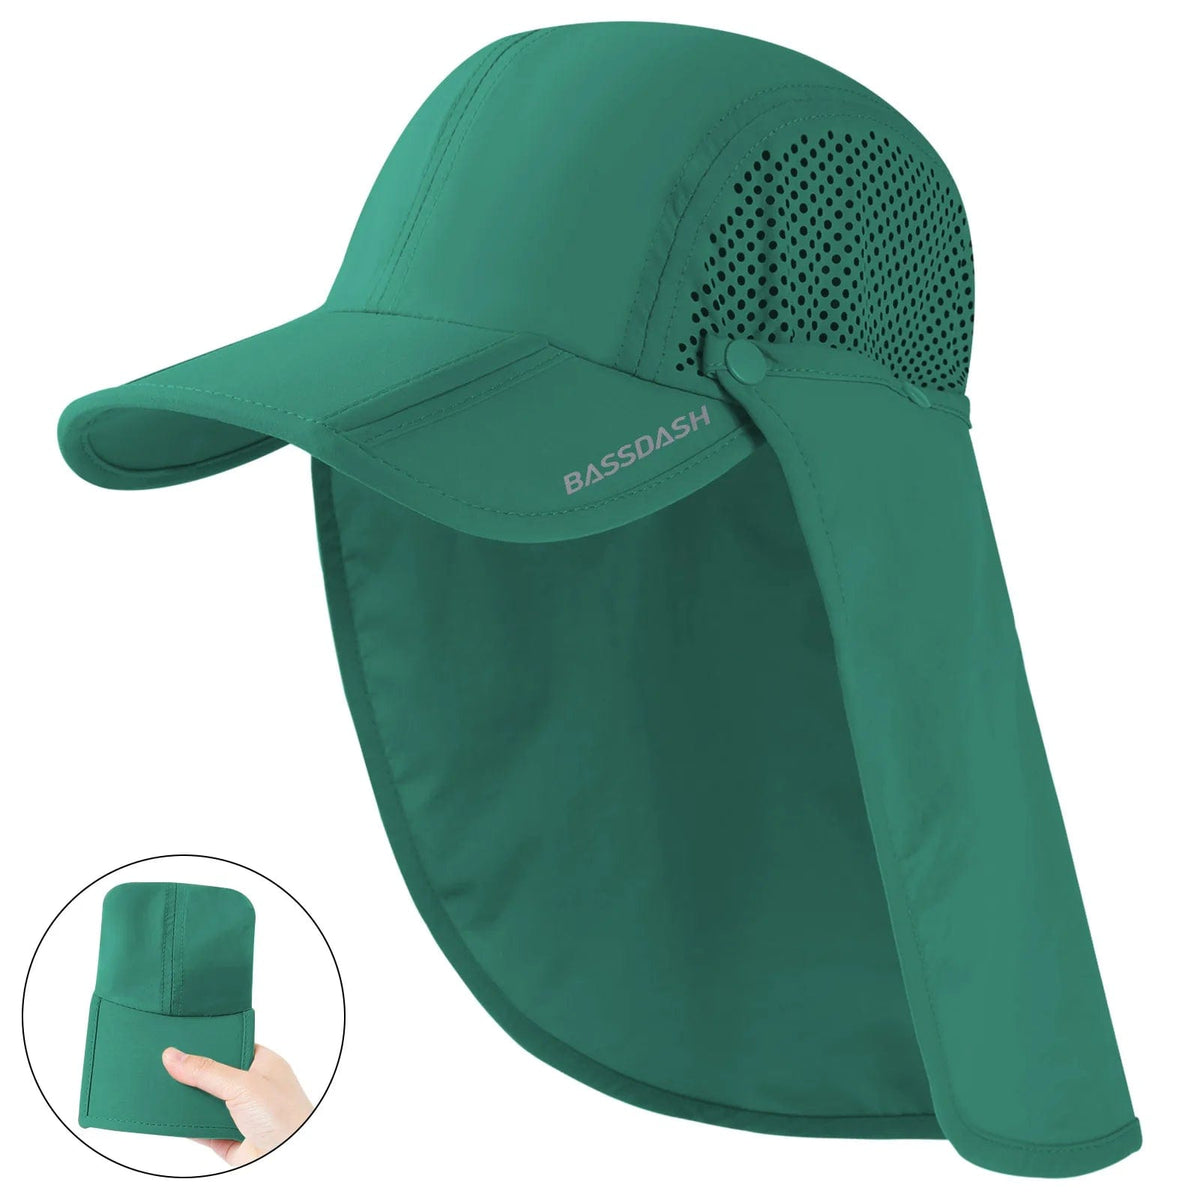 Apparel Bassdash Coolhead Fishing Hat A Gr Foldable Brim Bassdash Coolhead Fishing Hat | Pescador Fishing Supply